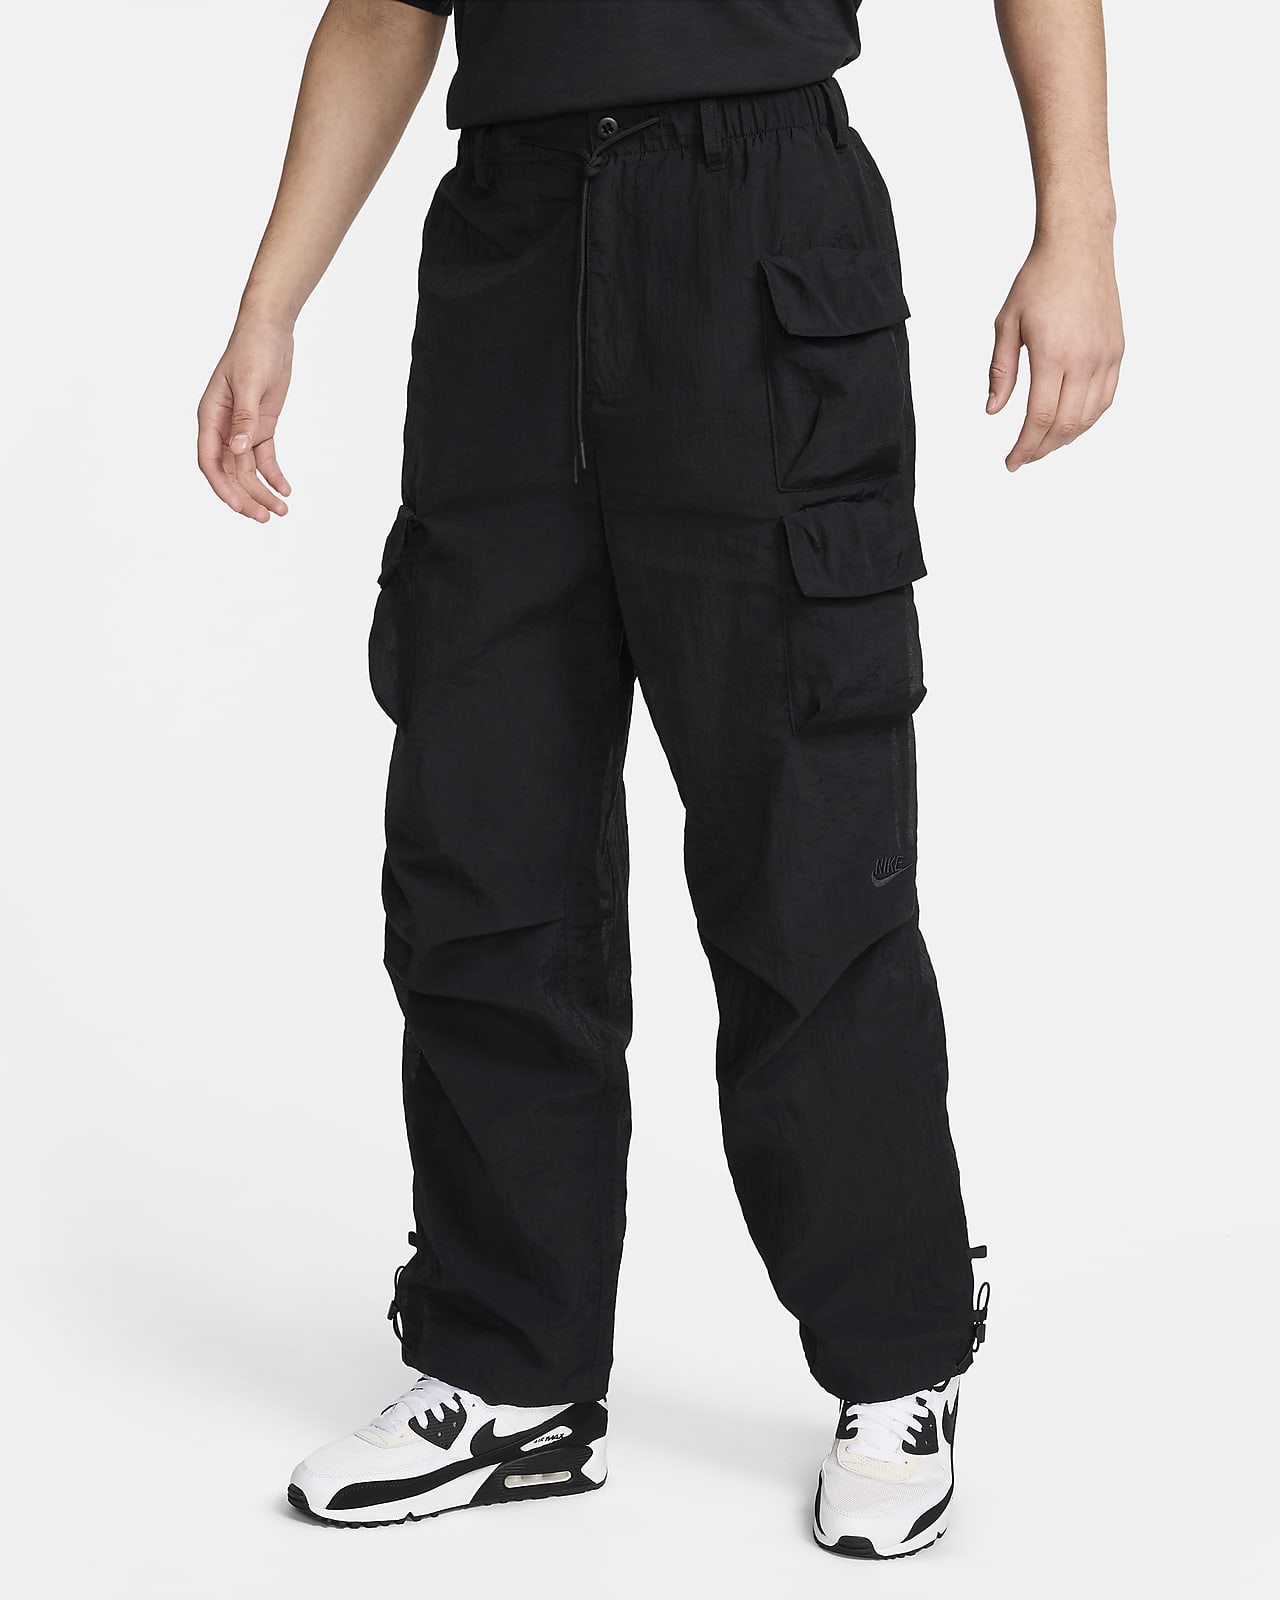 Pantalon doublé en tissu tissé Nike Sportswear Tech Pack pour homme